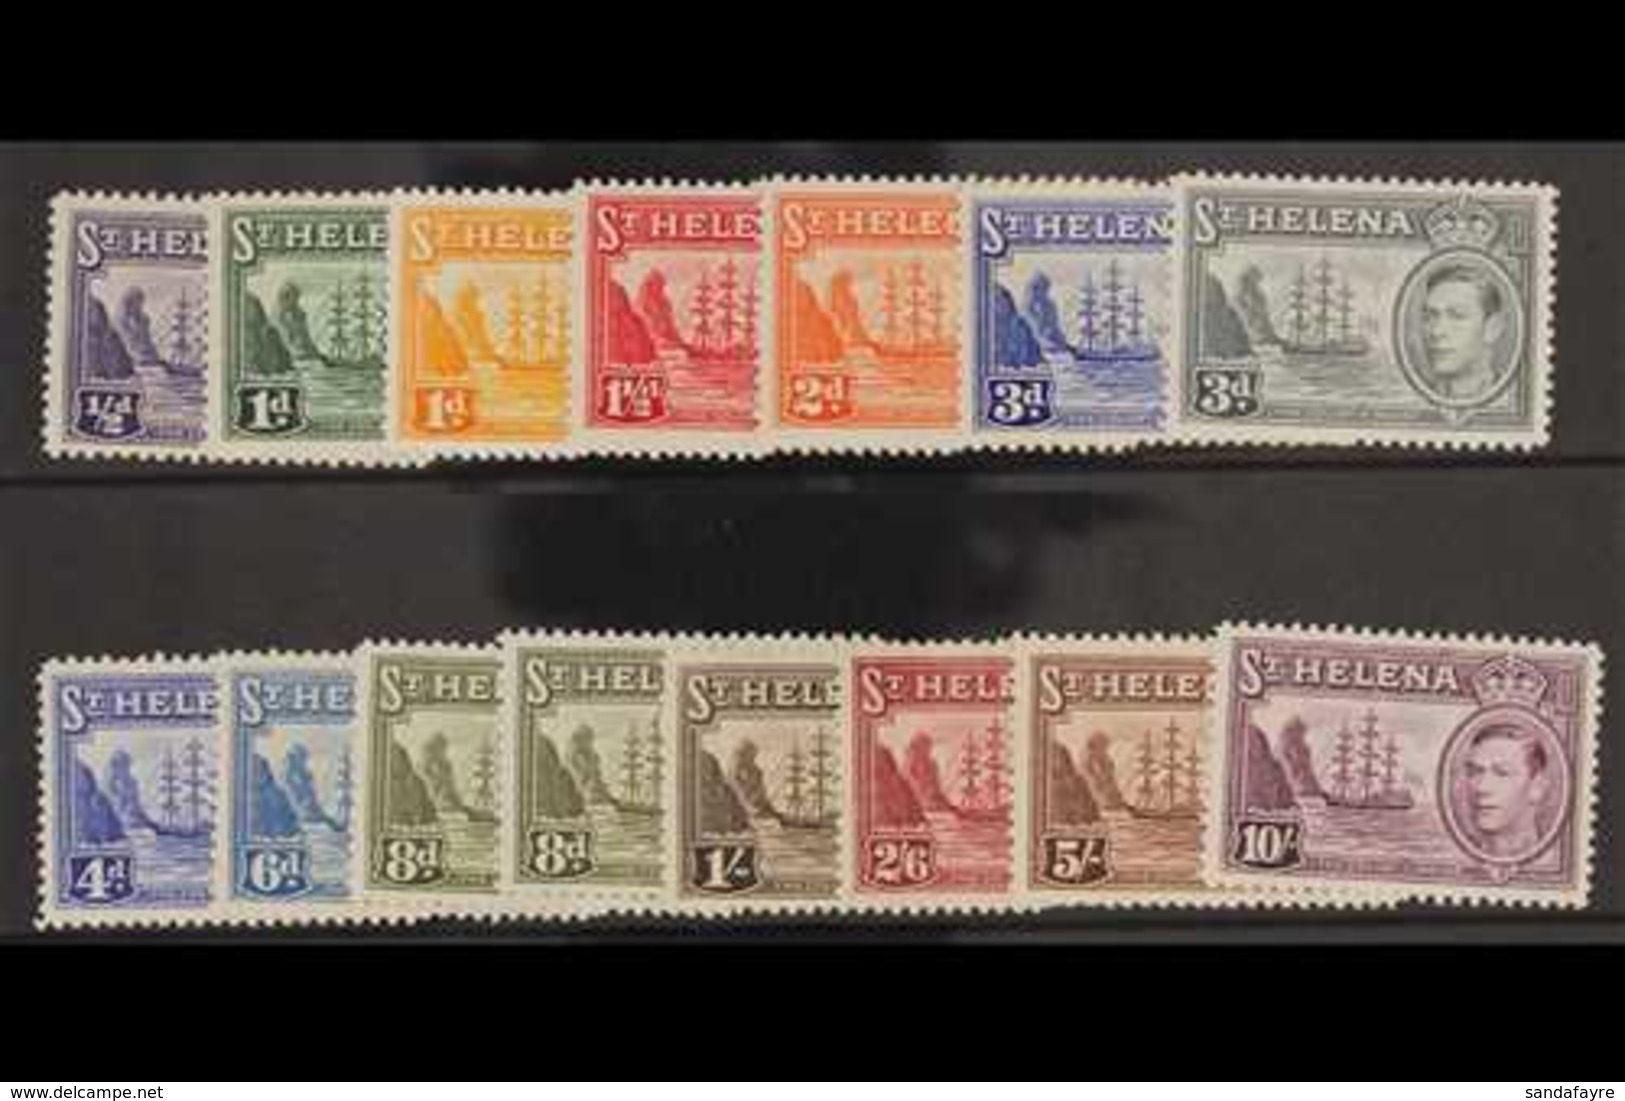 1938-44 Complete Definitive Set, SG 131/140, Plus 8d Listed Shade, Very Fine Mint. (15 Stamps) For More Images, Please V - Sainte-Hélène